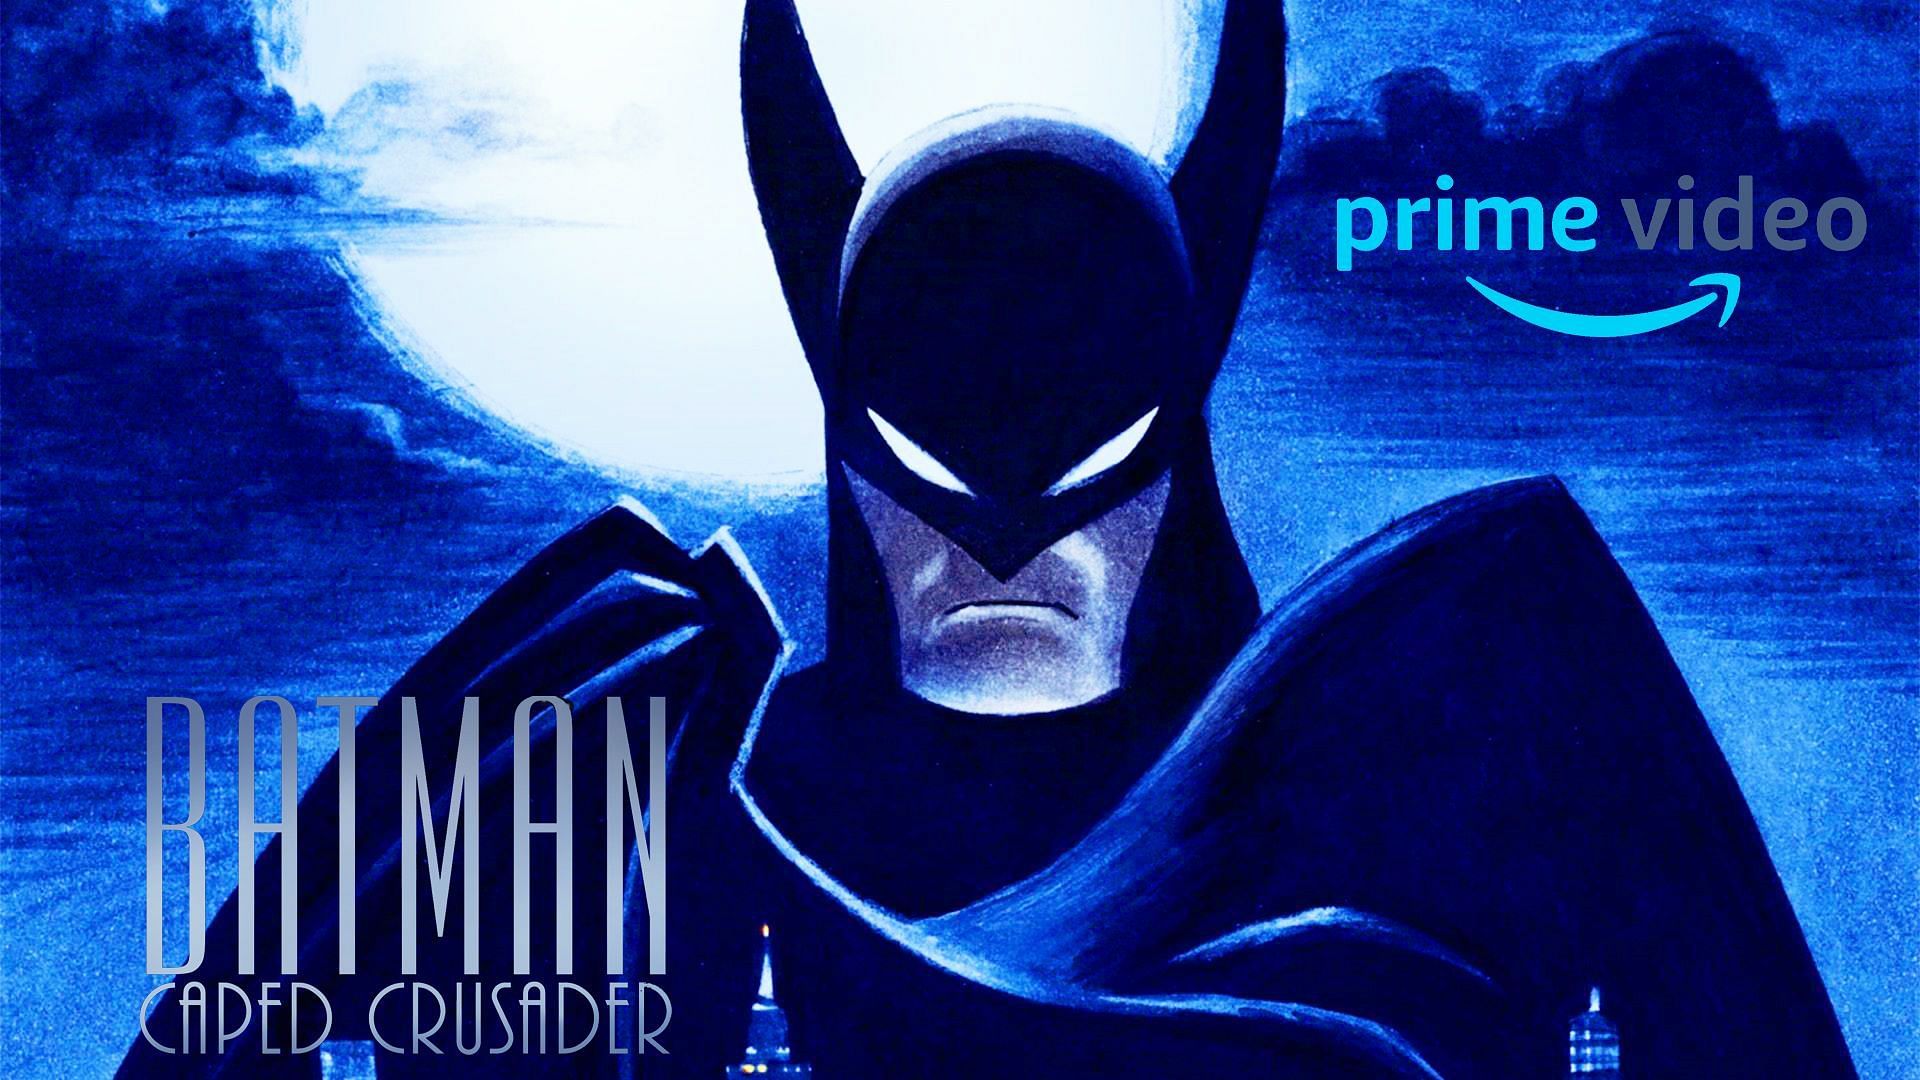 Batman: Caped Crusader picked by Amazon Prime Video (Image via Sportskeeda)